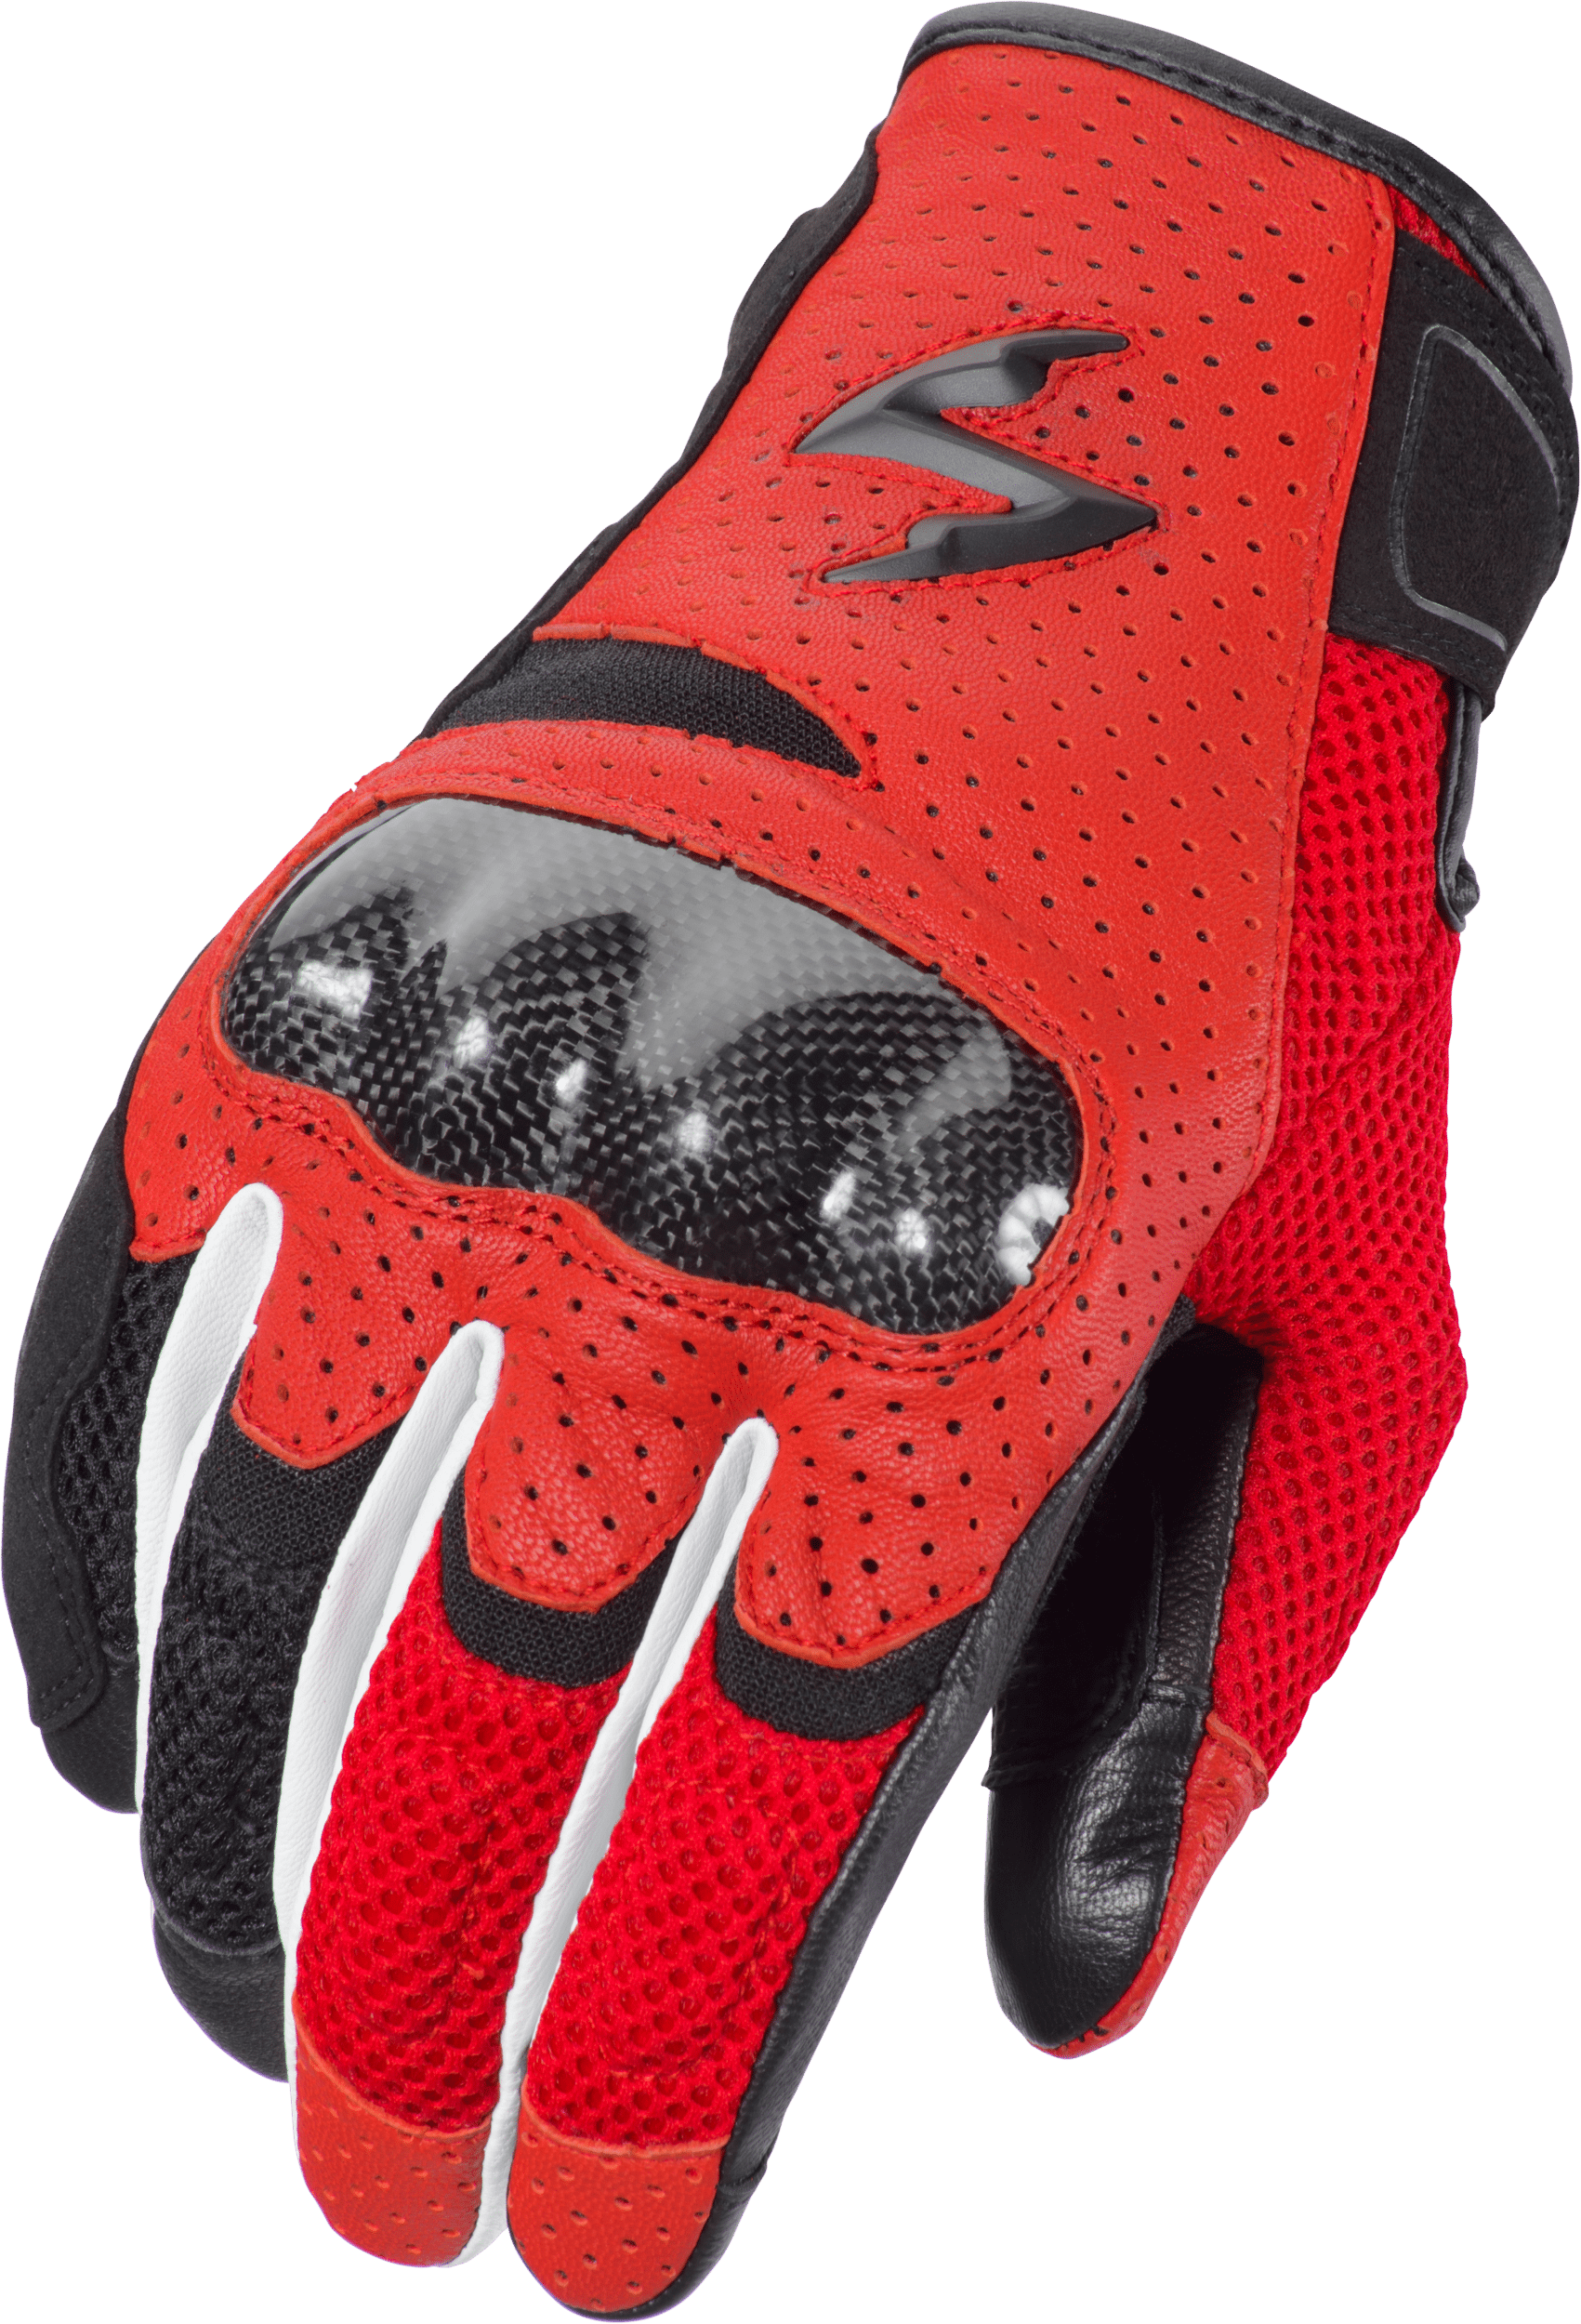 Western Powersports Gloves Red / 2X-Large Vortex Air Gloves by Scorpion Exo G72-017